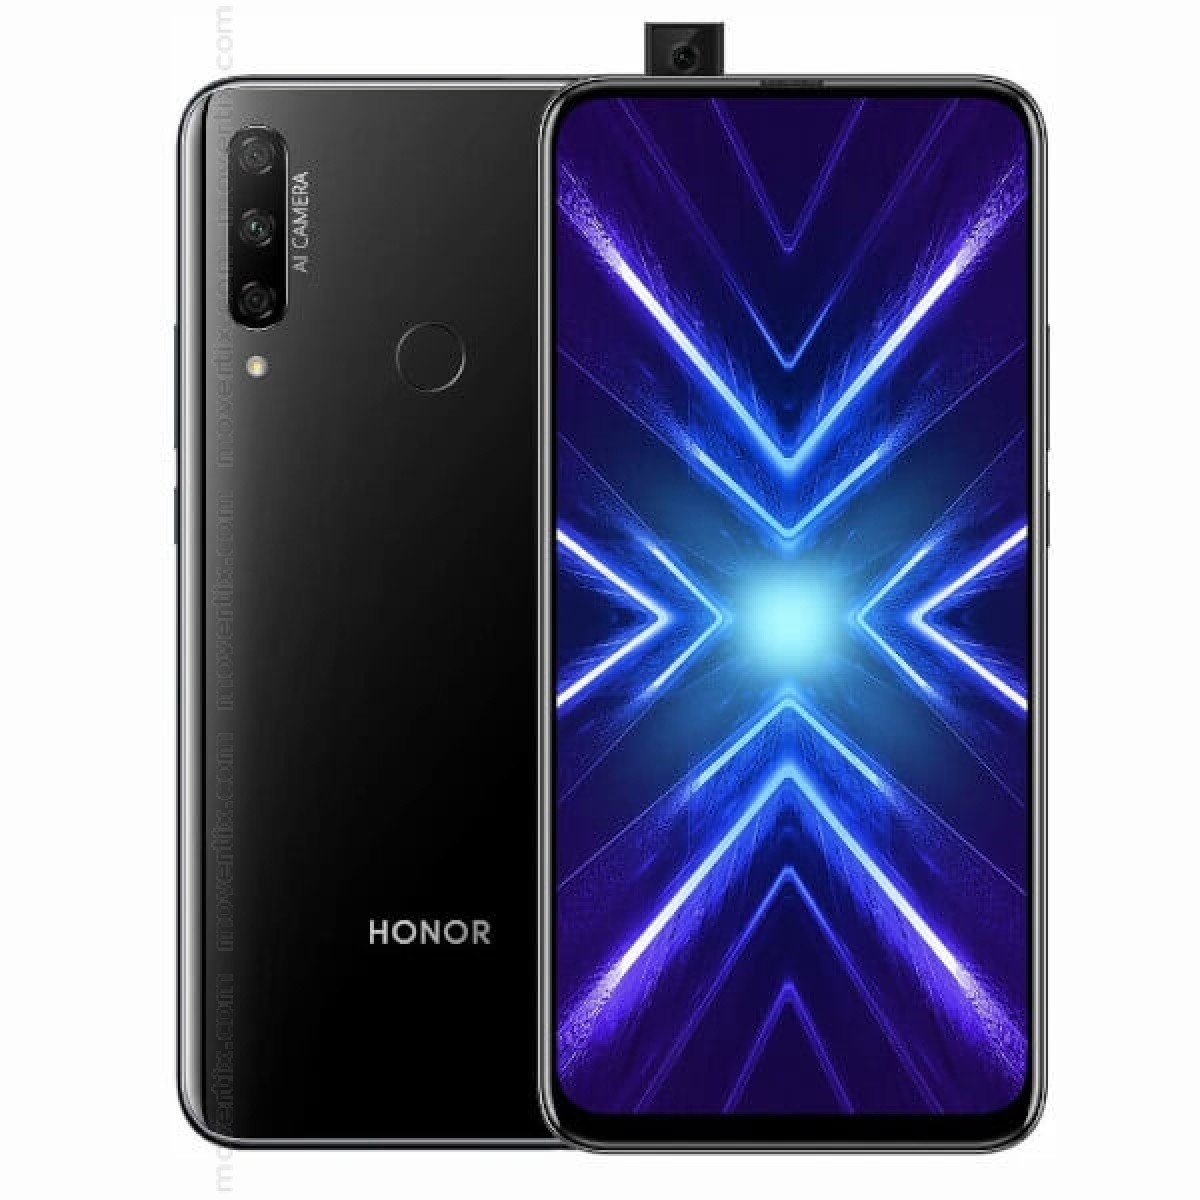 Smartphone Huawei Honor 9X Pro 256GB Black Phoneshock it